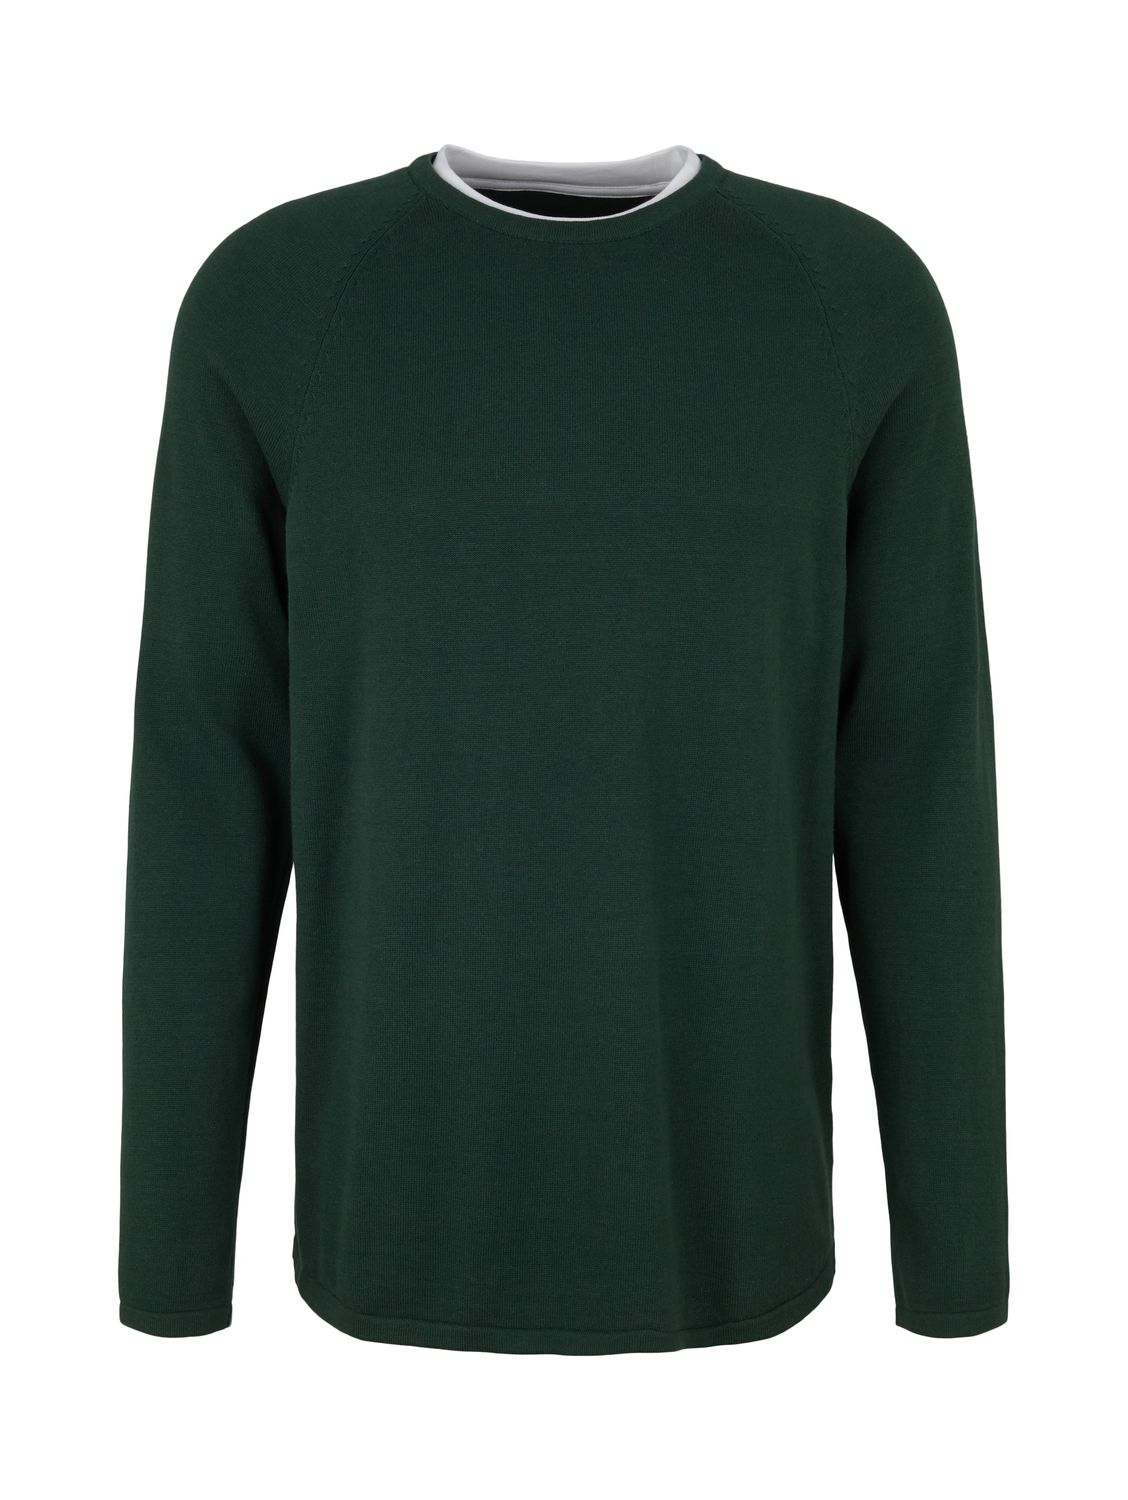 Пуловер TOM TAILOR Denim BASIC, зеленый пуловер tom tailor denim basic серый